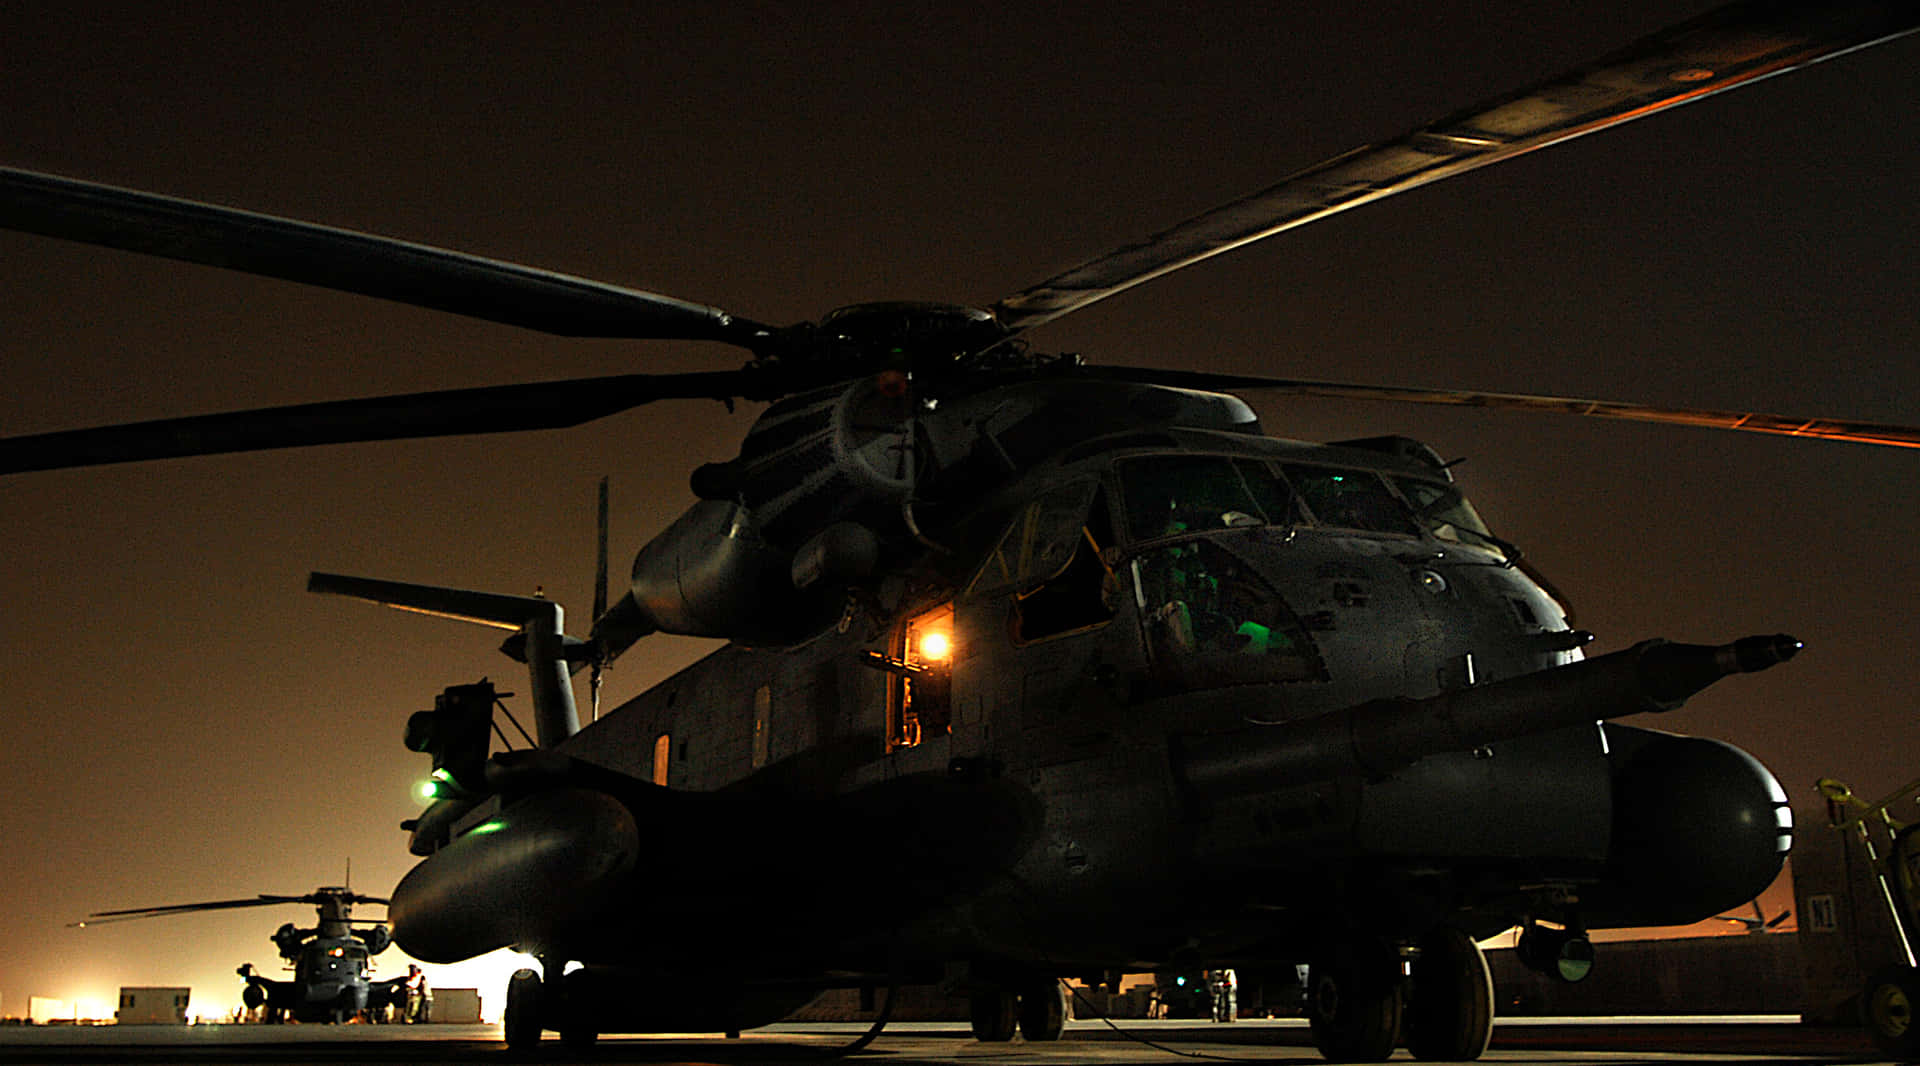 Caption: Majestic Sikorsky CH-53E Super Stallion Helicopter Model Wallpaper